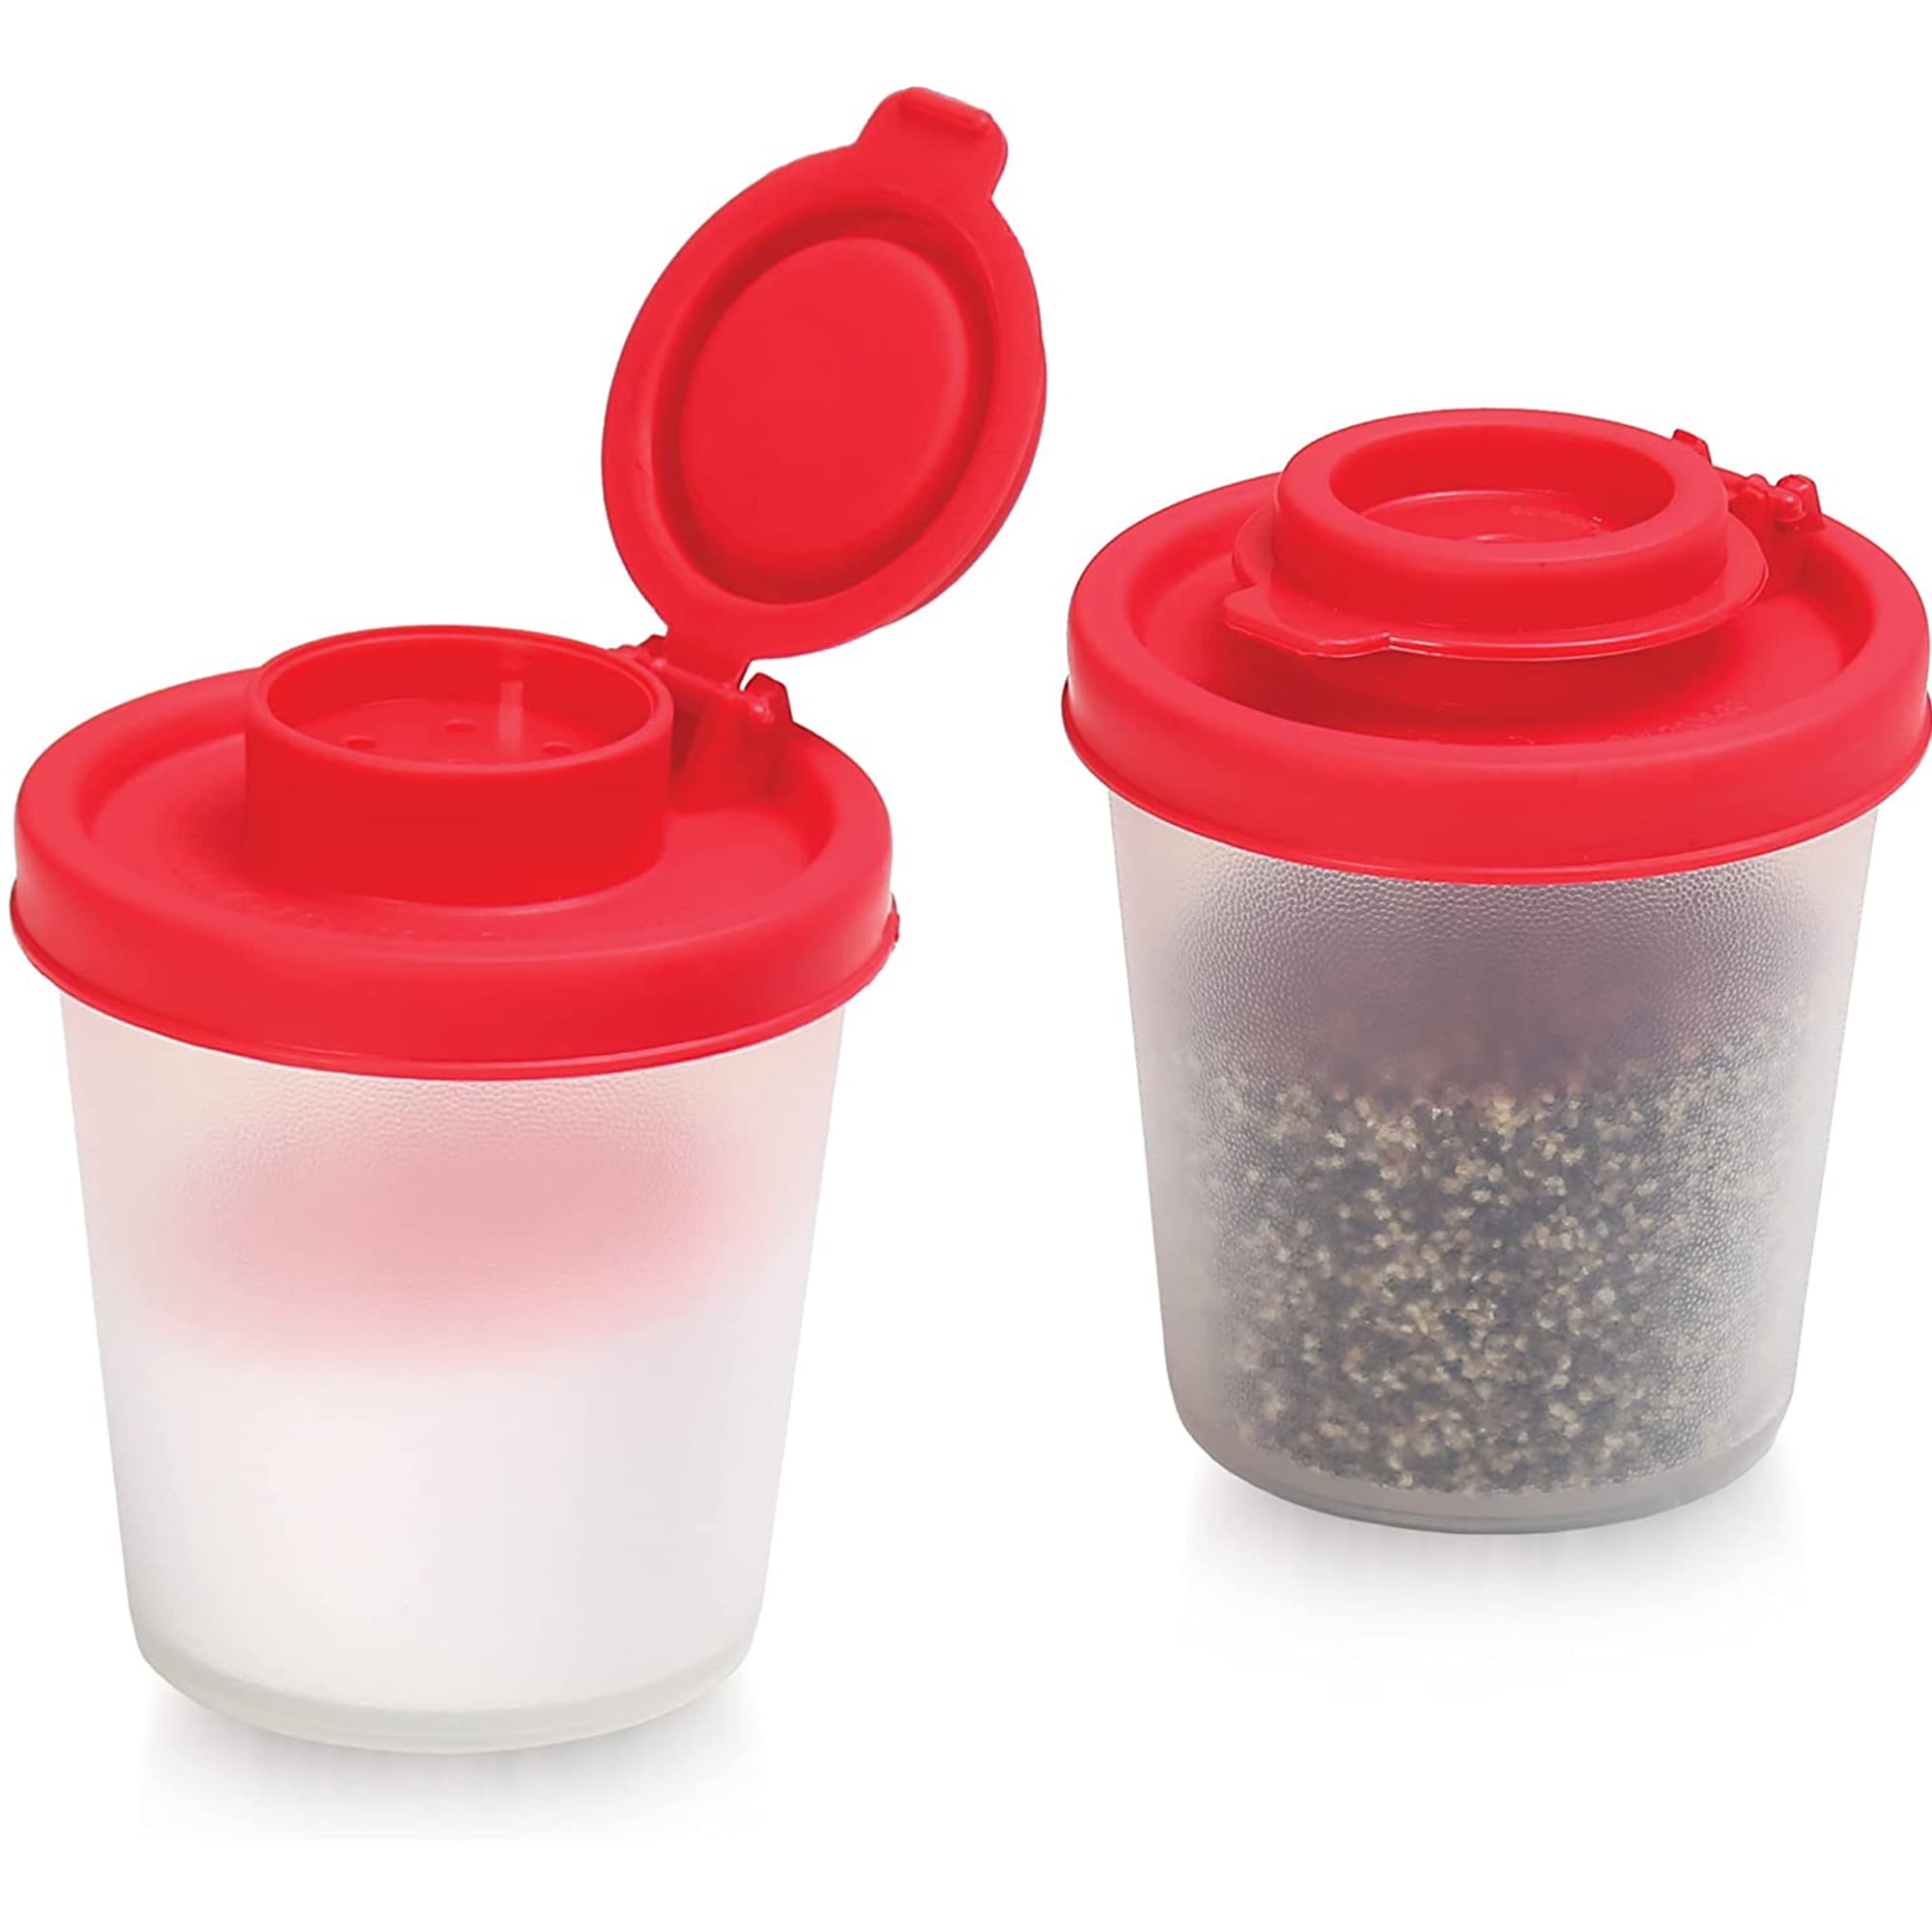 Red Salt and Pepper Shakers Set - Bivvclaz 2.7 oz Christmas Salt